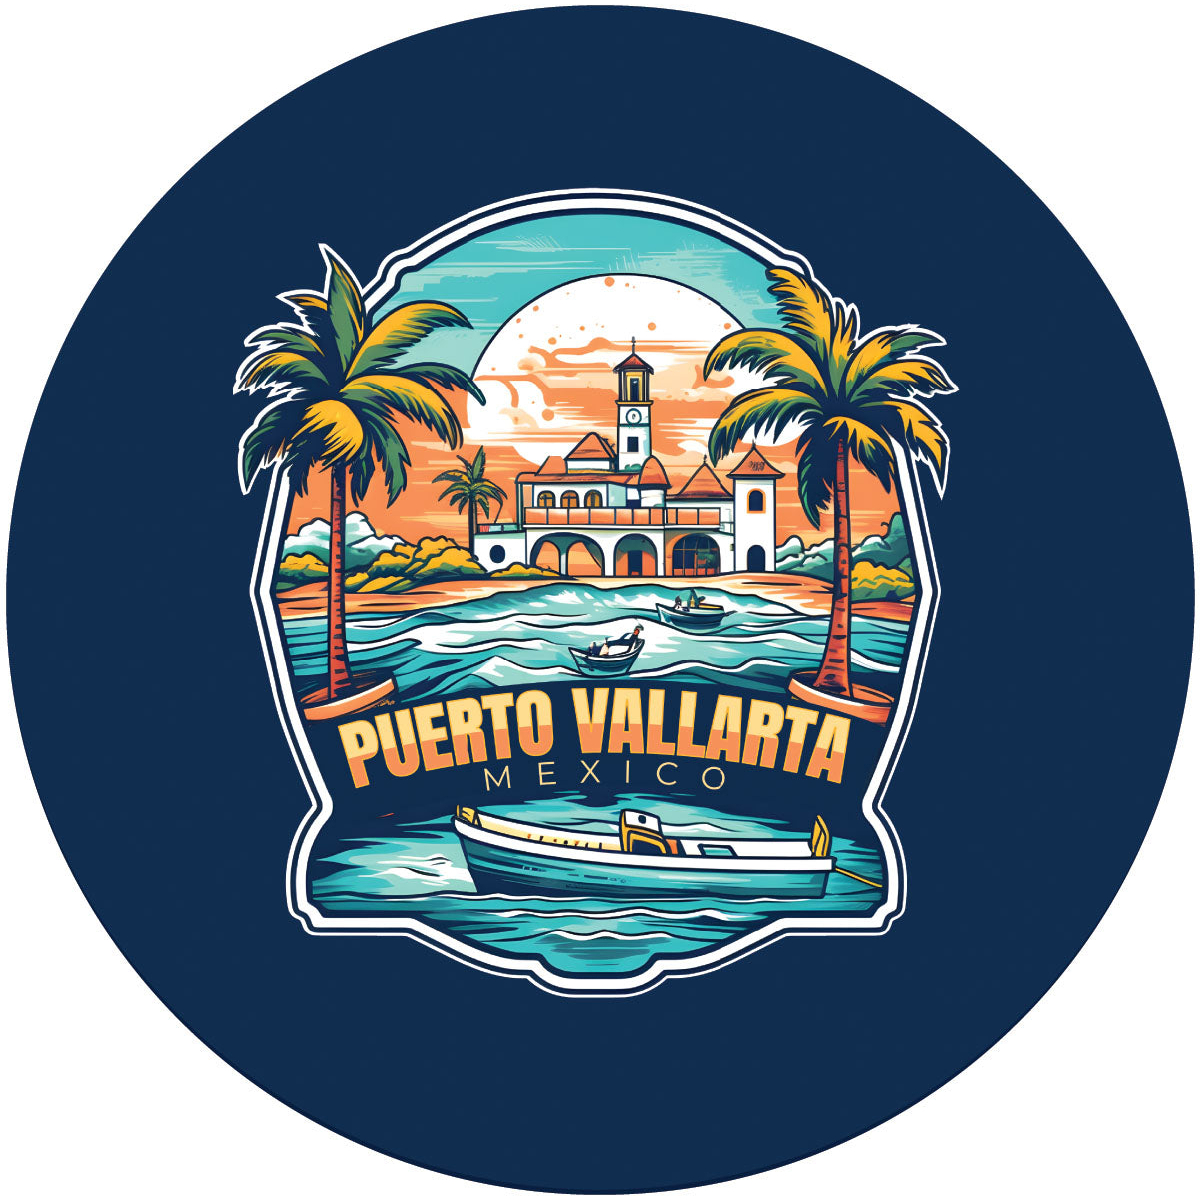 Puerto Vallarta Mexico Design A Souvenir Round Vinyl Decal Sticker - 6-Inch